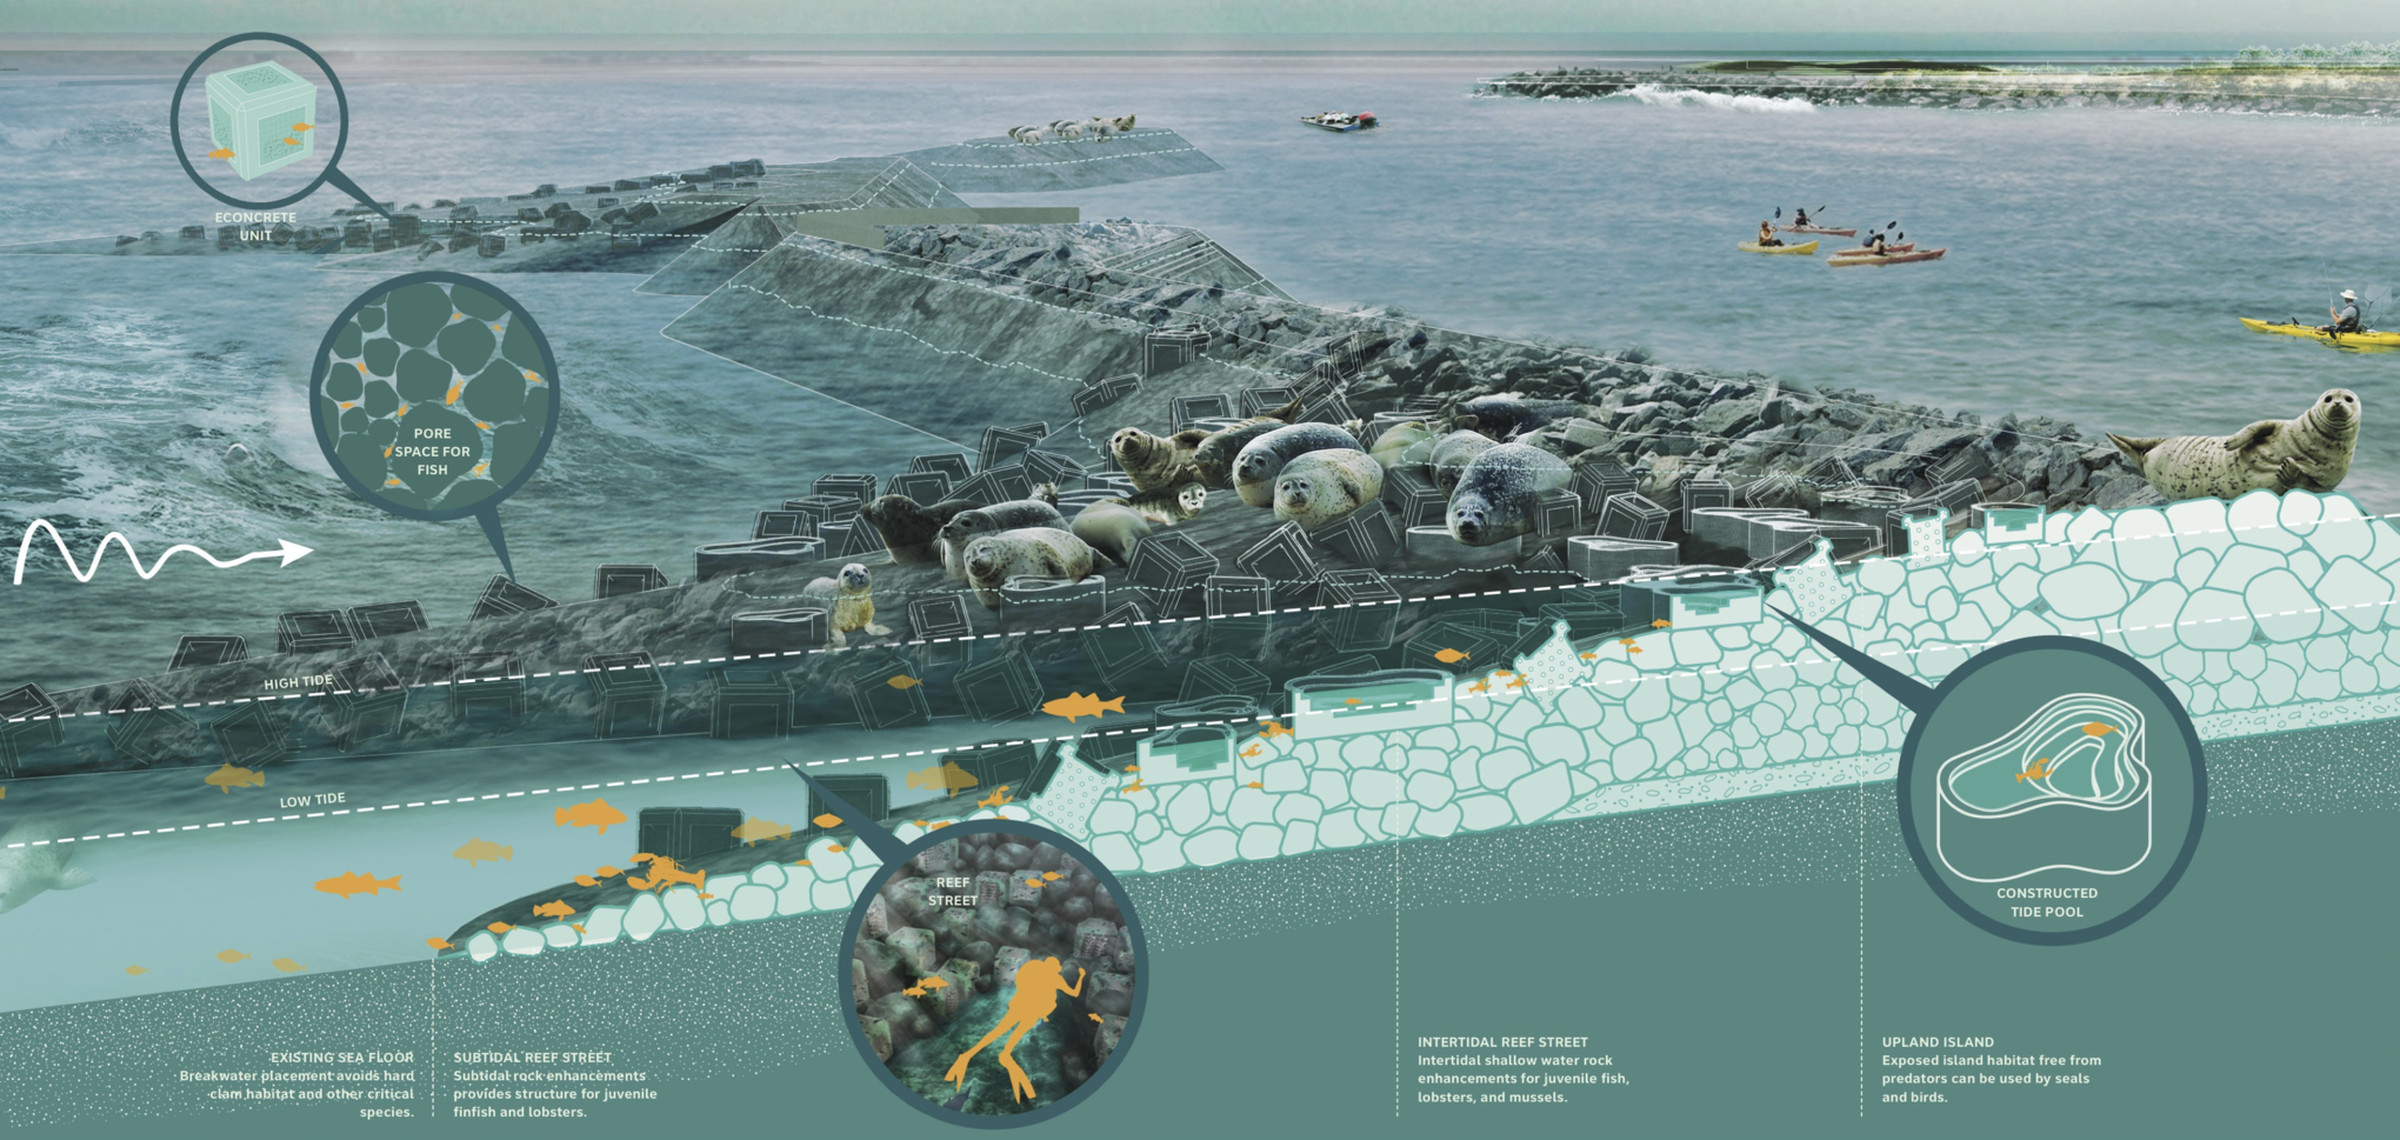 New York flood defense projects concept art